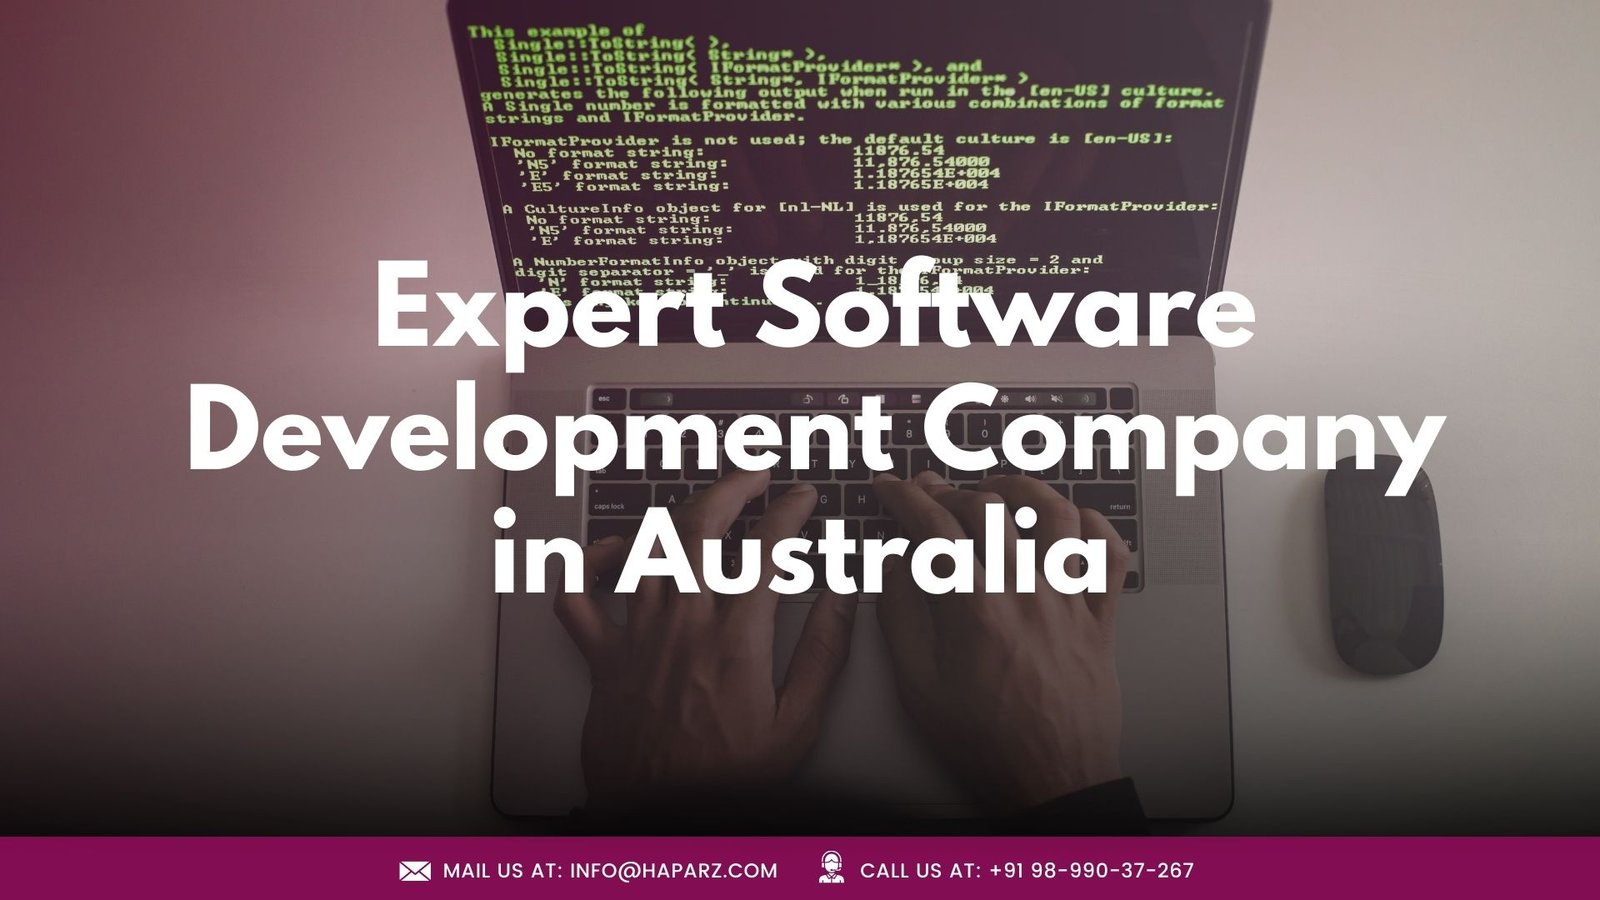 Expert Software Development Company in Australia